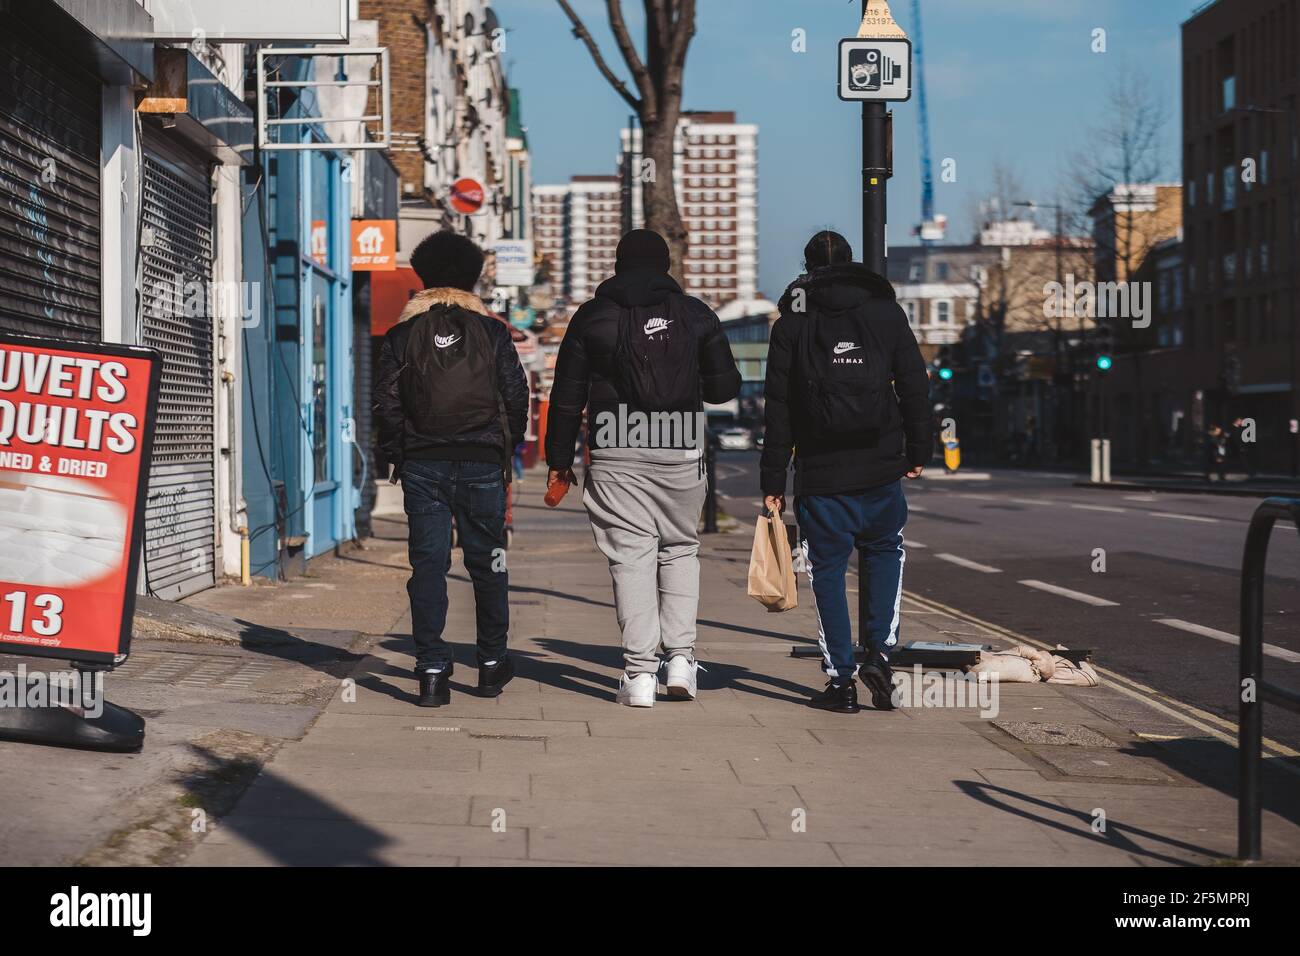 Shepherd's Bush, London | UK -  2021.03.22: Three young men walking down the street in the Urban dangerous dodgy area. Stock Photo